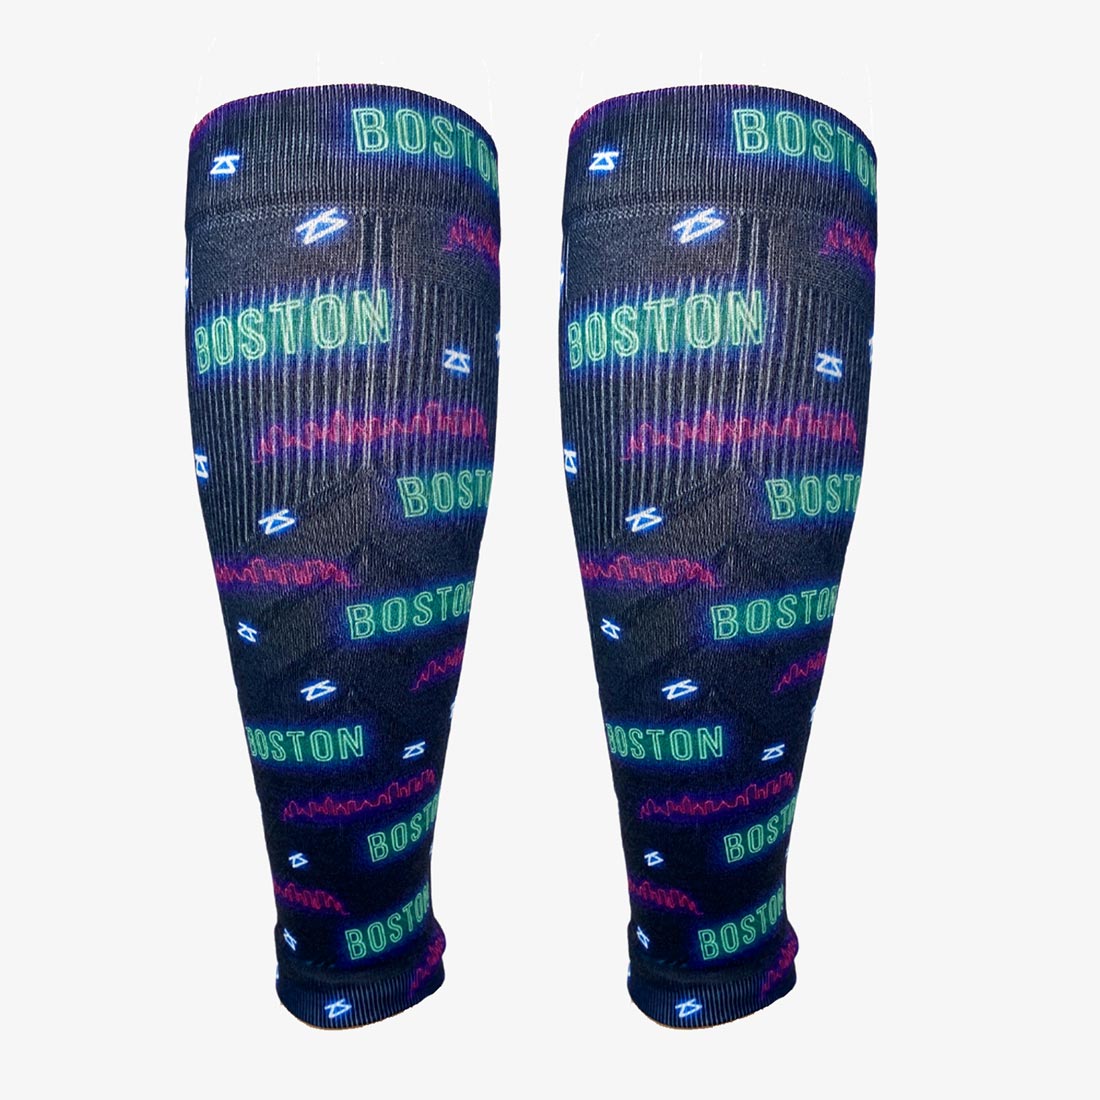 Neon Boston Compression Leg Sleeves